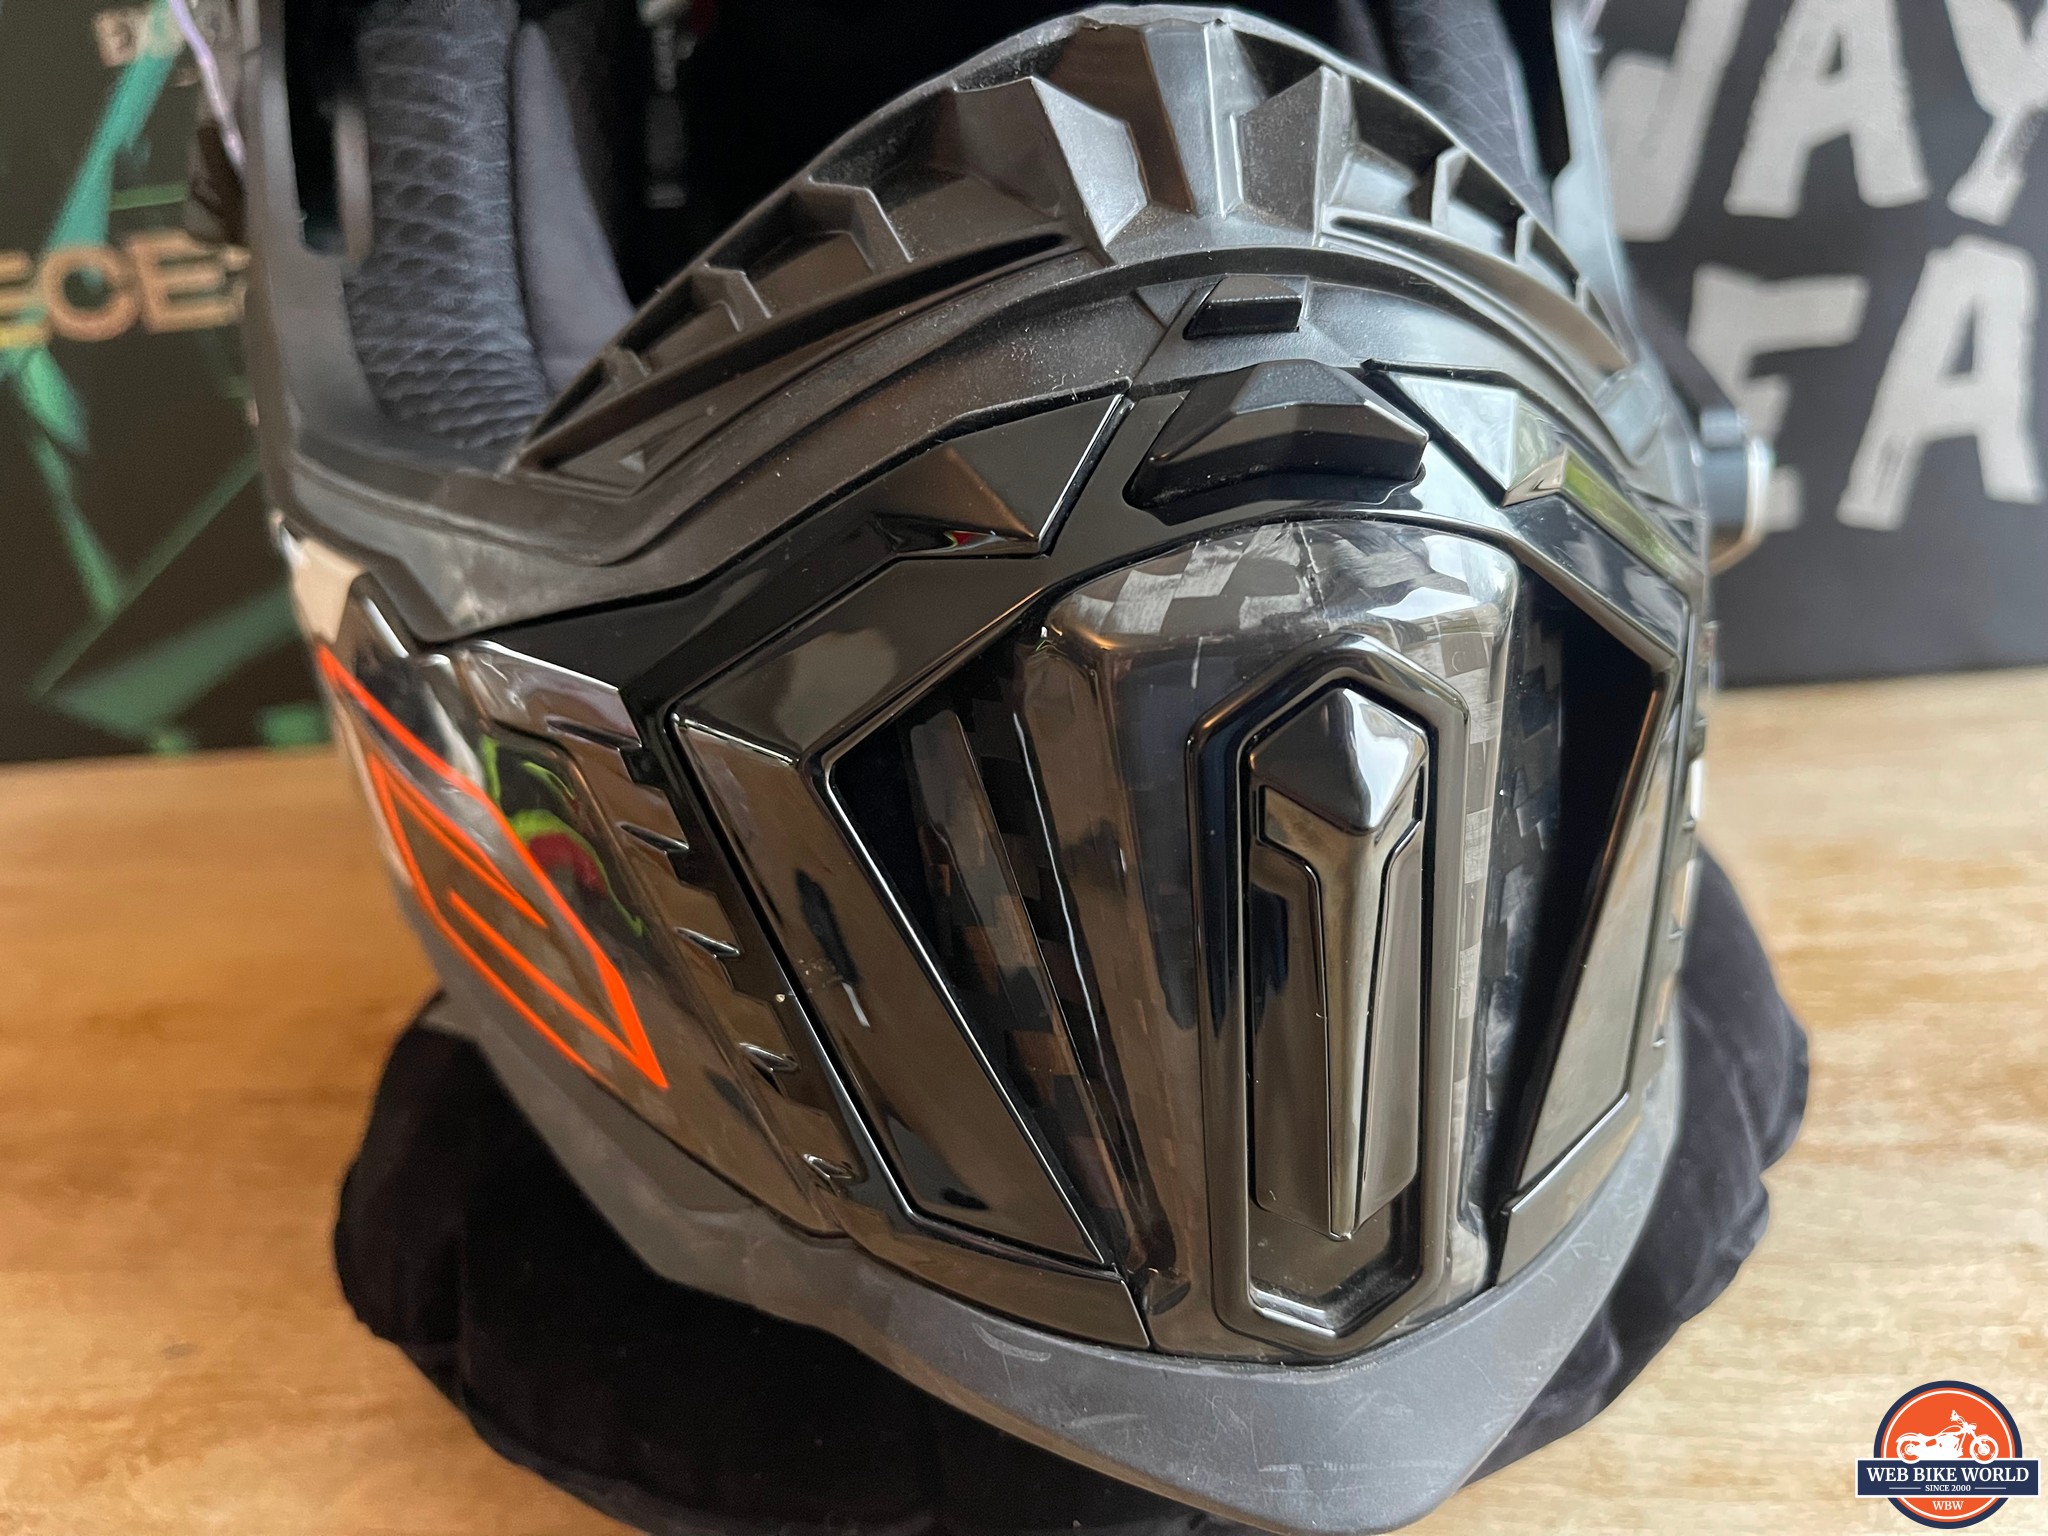 Front chin vent on the LS2 Explorer Carbon Helmet